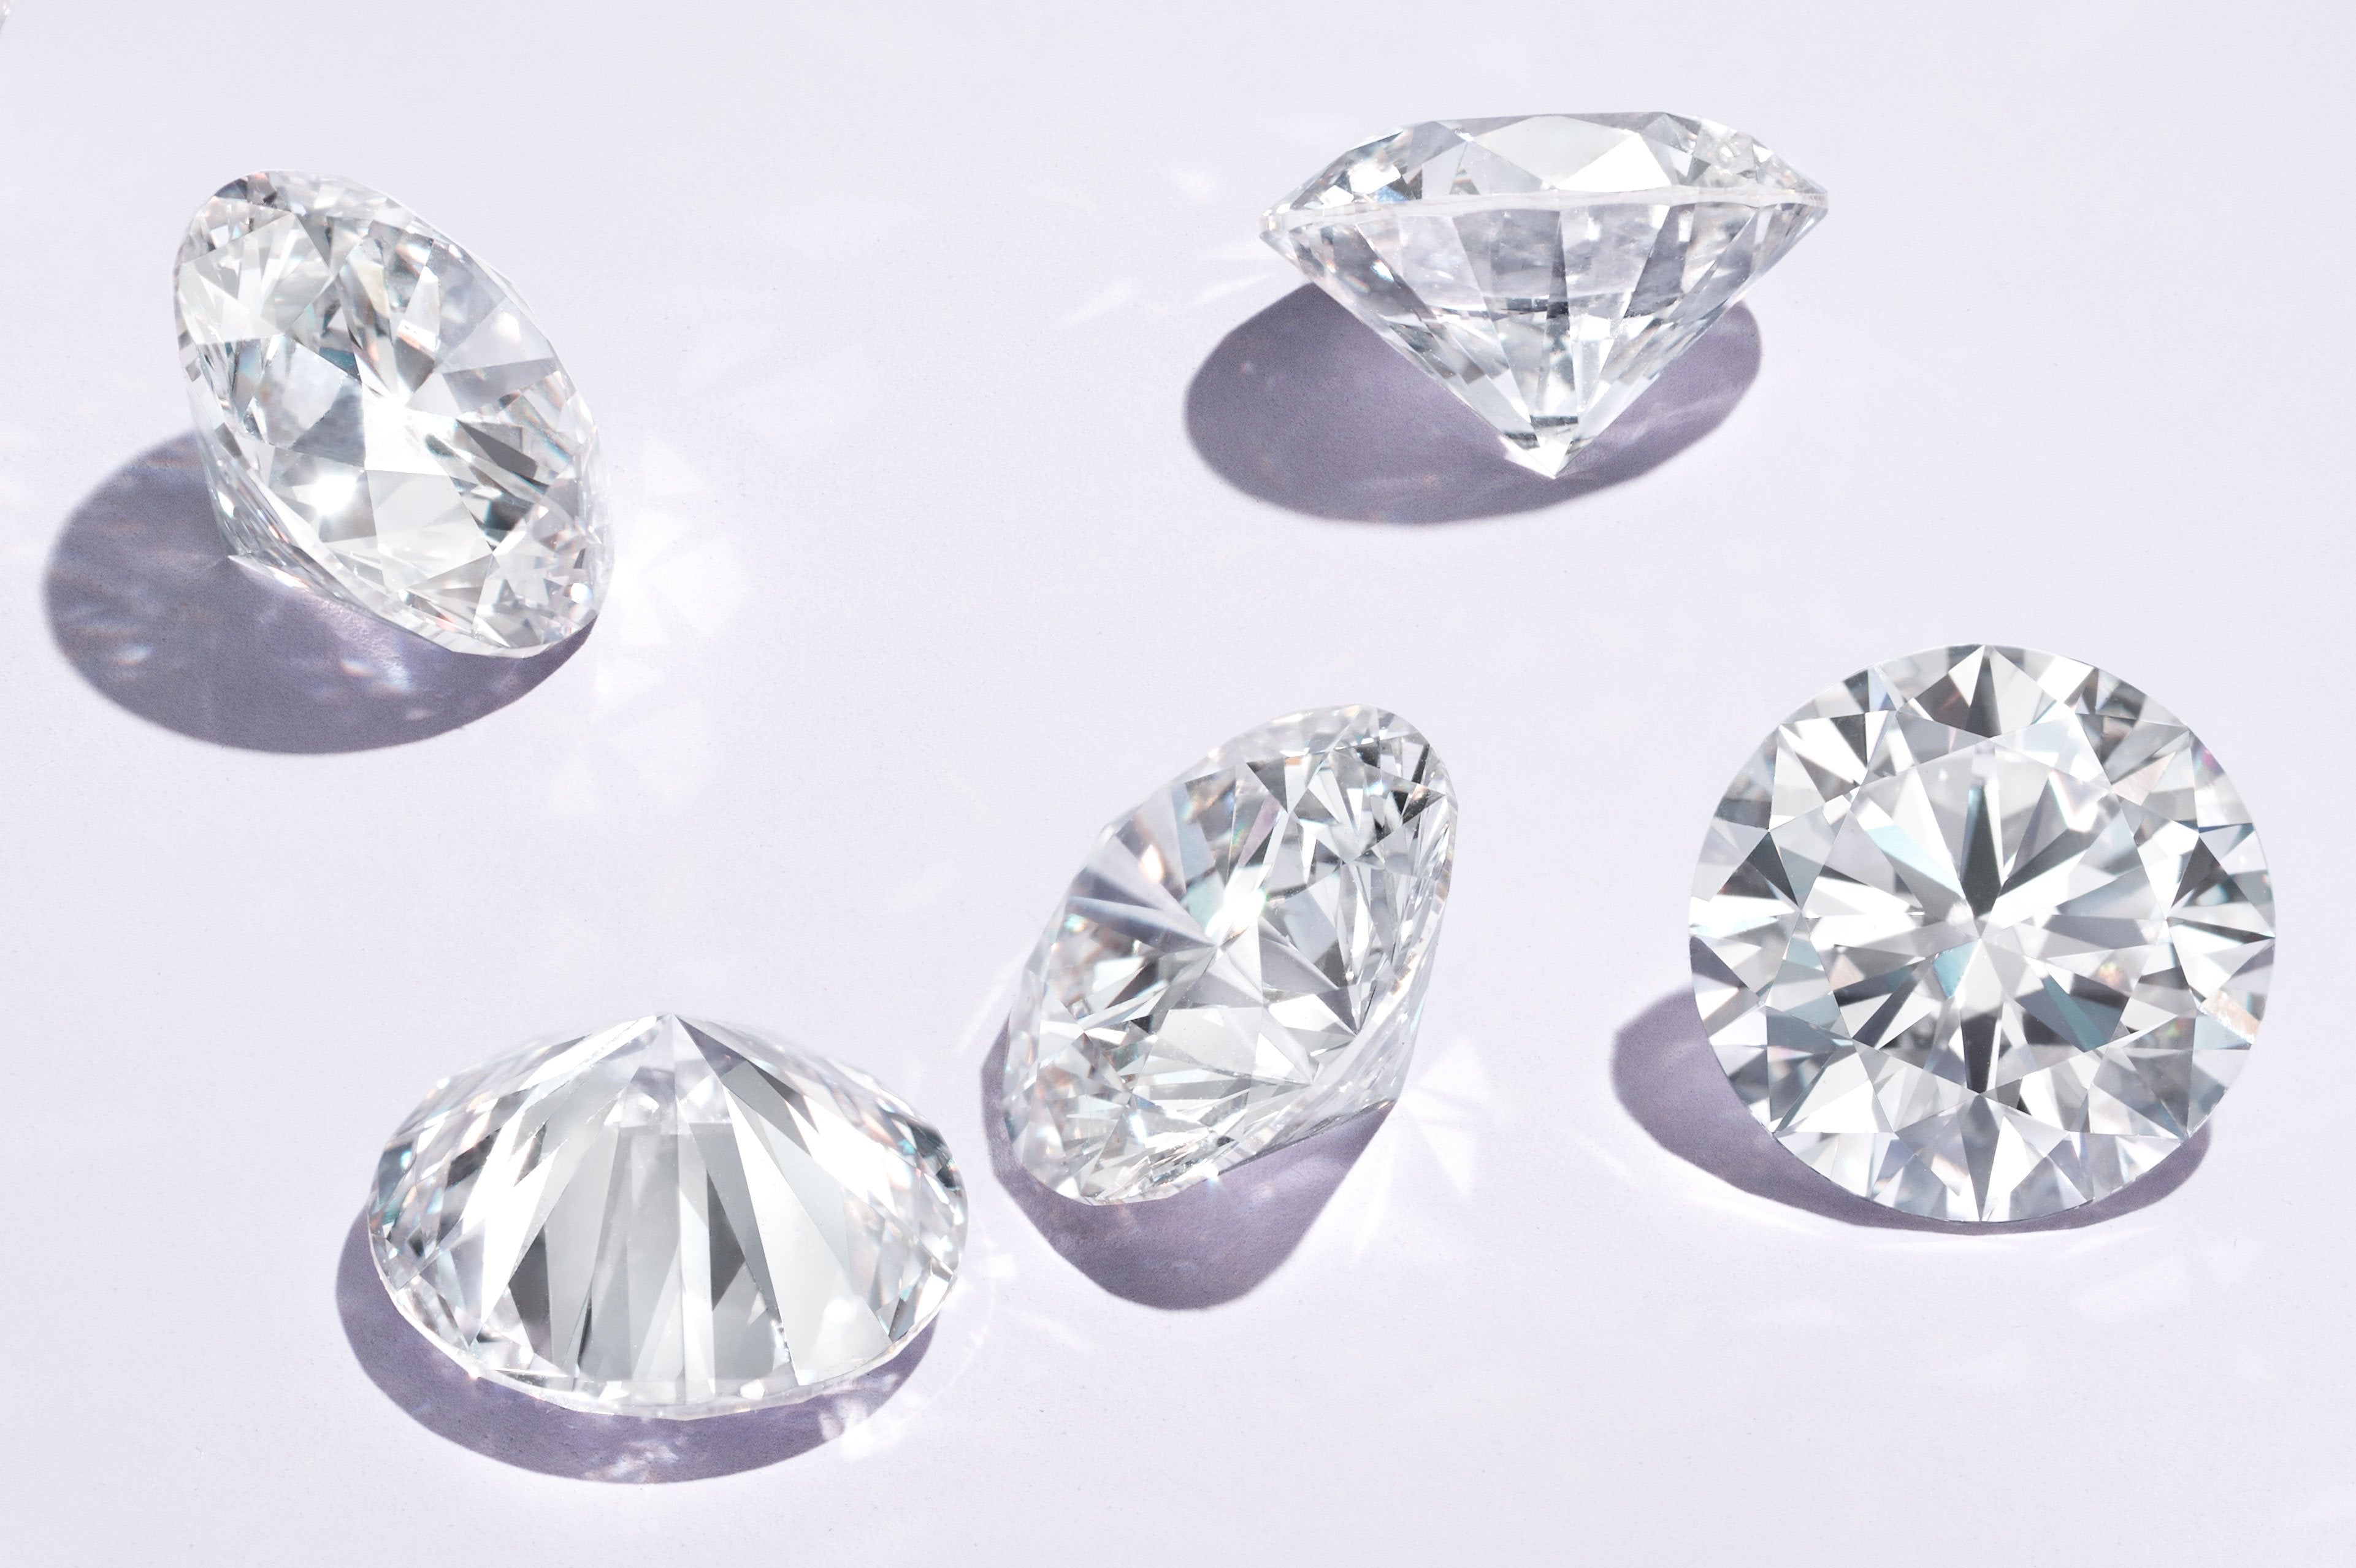 Earth-Mined Diamonds vs. Lab-Grown Diamonds